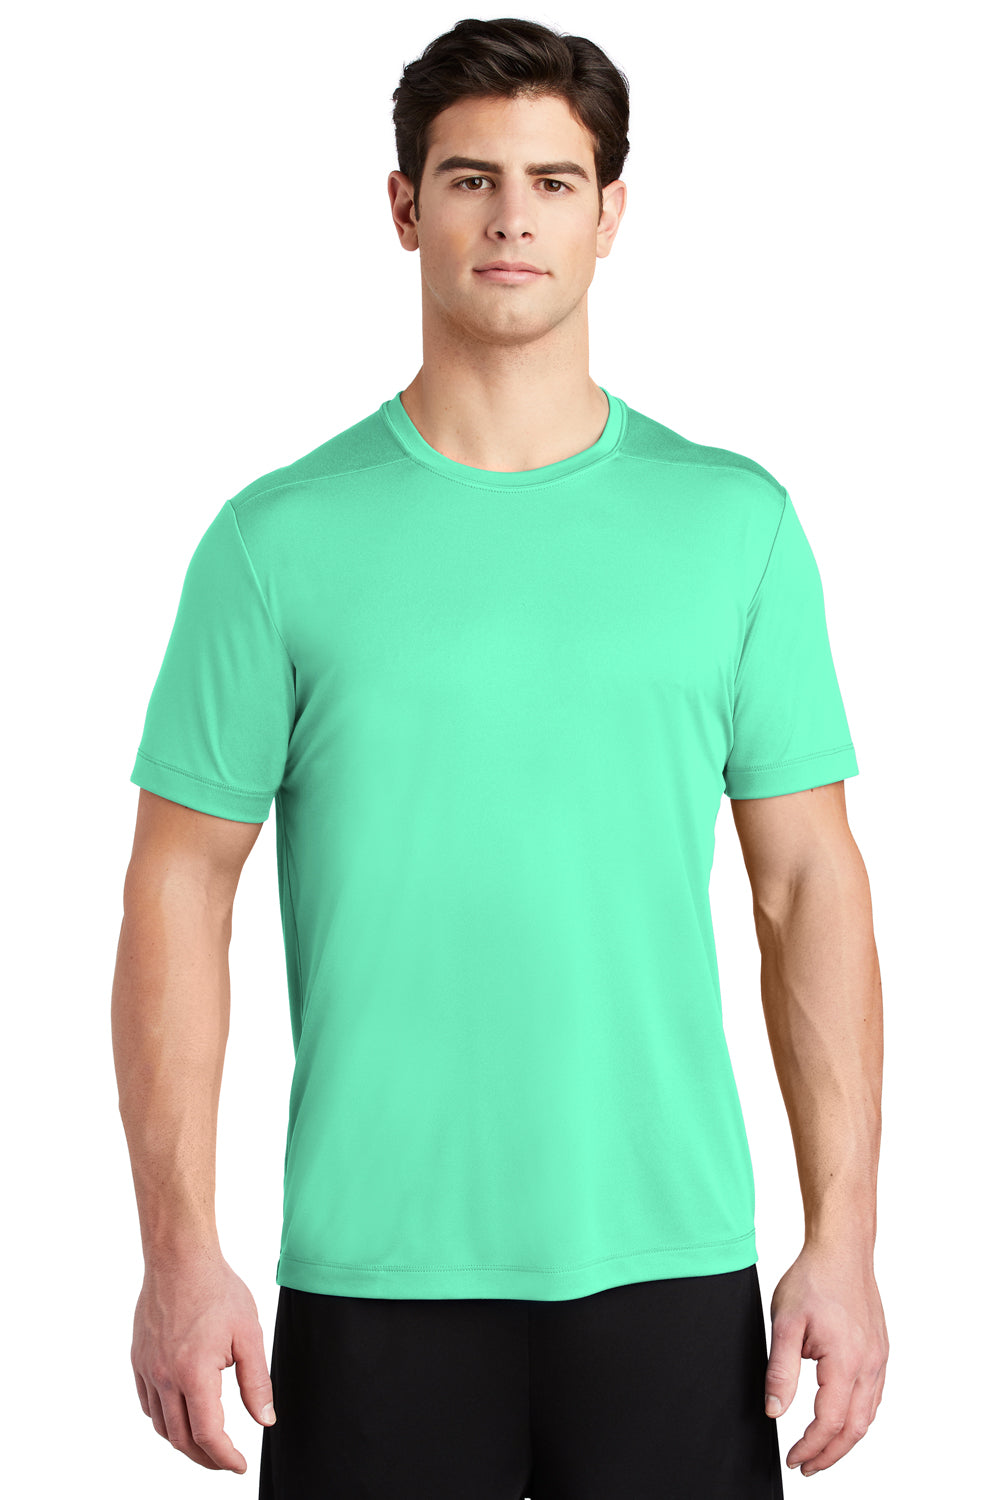 Sport-Tek Mens Short Sleeve Crewneck T-Shirt Bright Seafoam Green Front